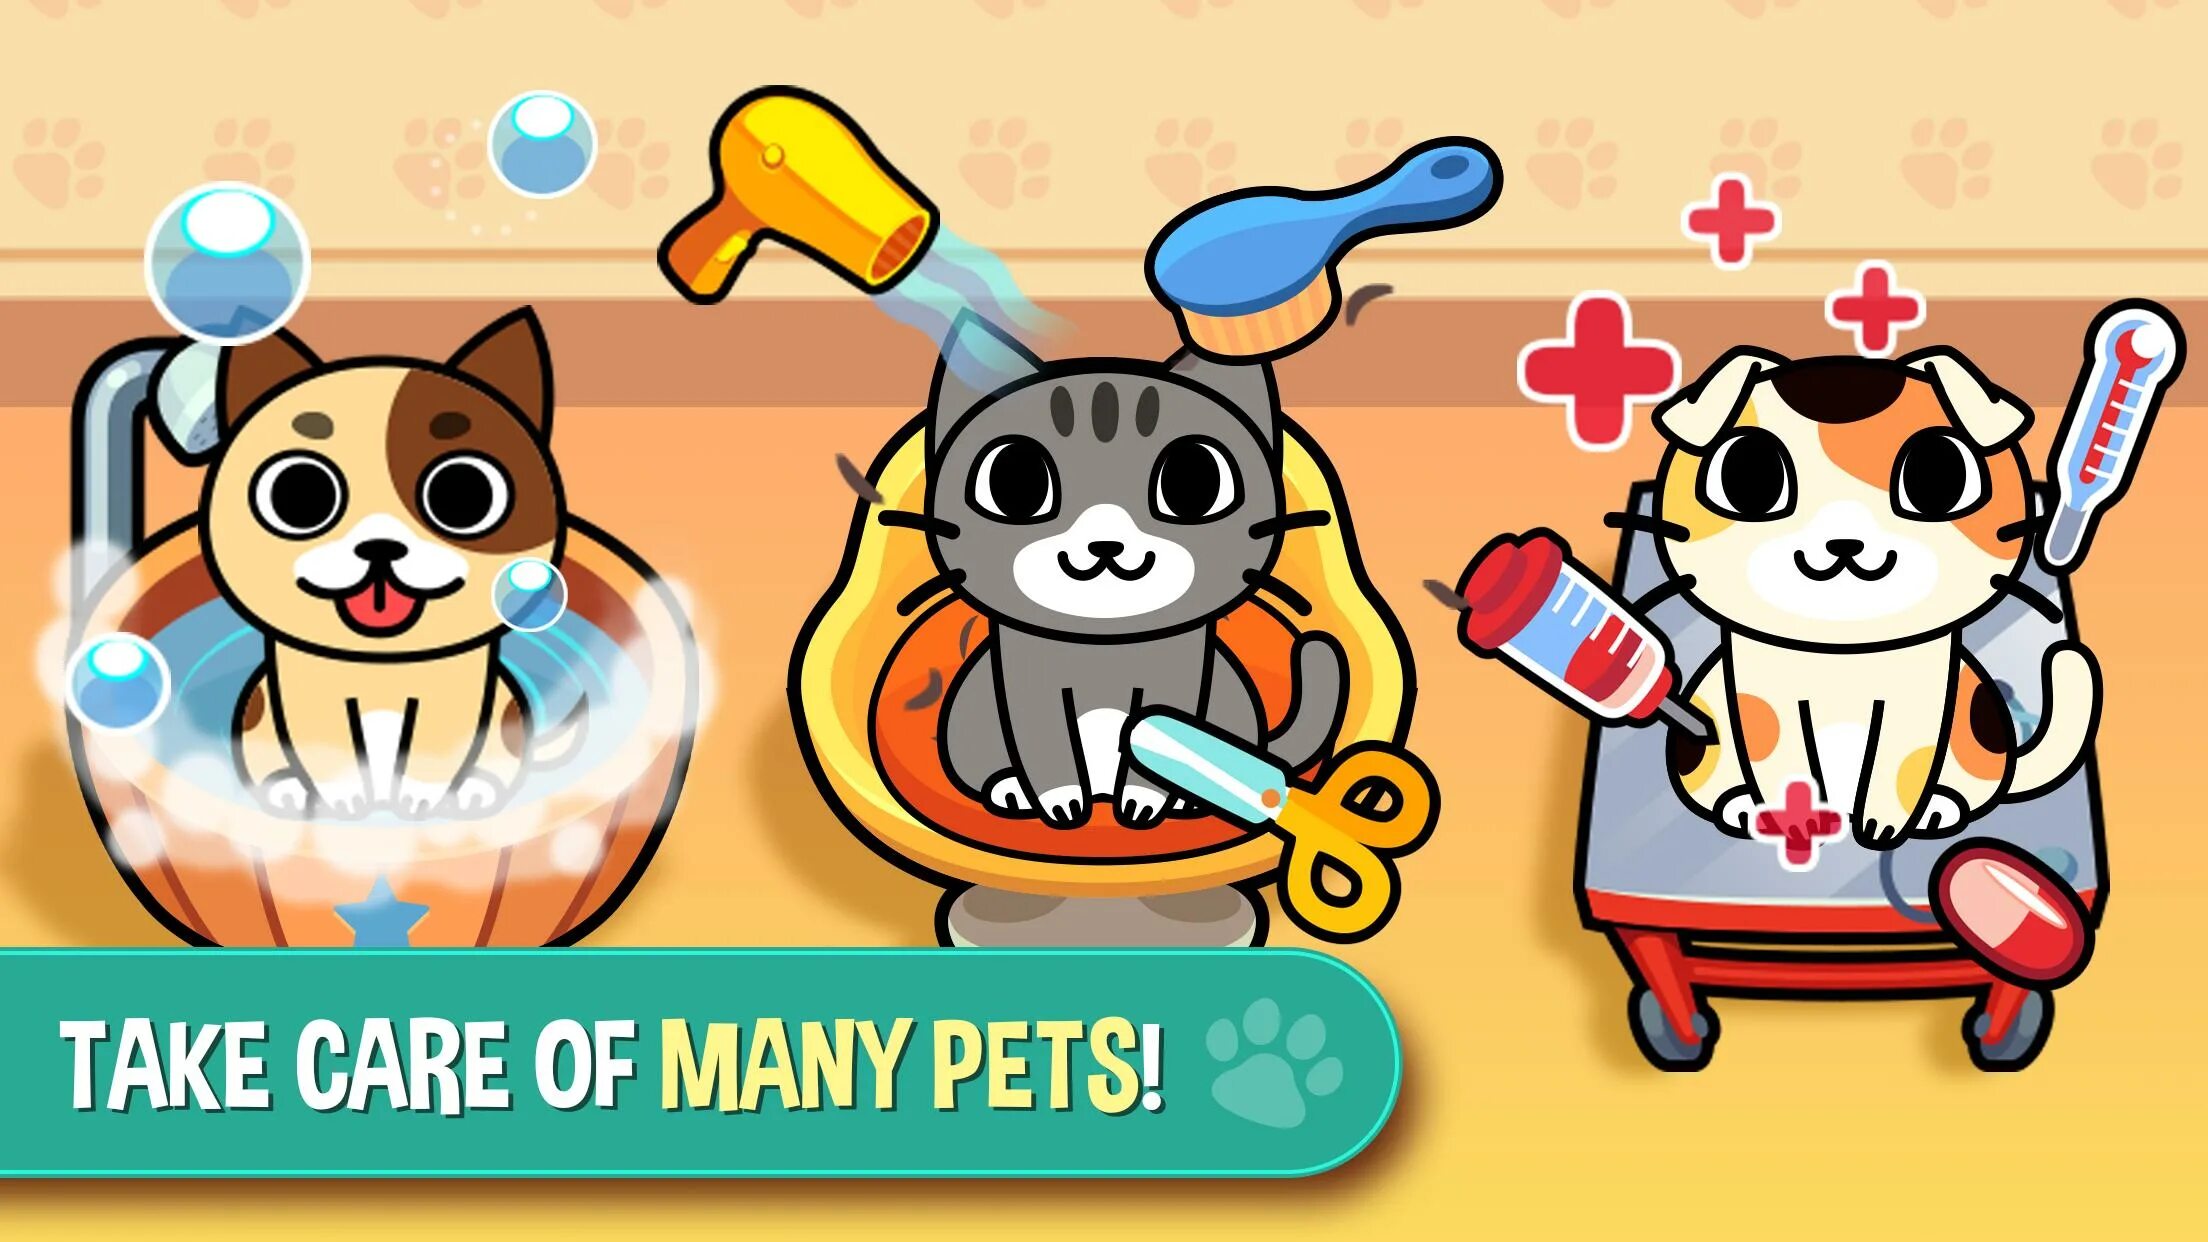 Virtual Pet. My Virtual Pet shop Tapps games. My Virtual Pet shop - cute animal Care game ✿. Virtual pet что это